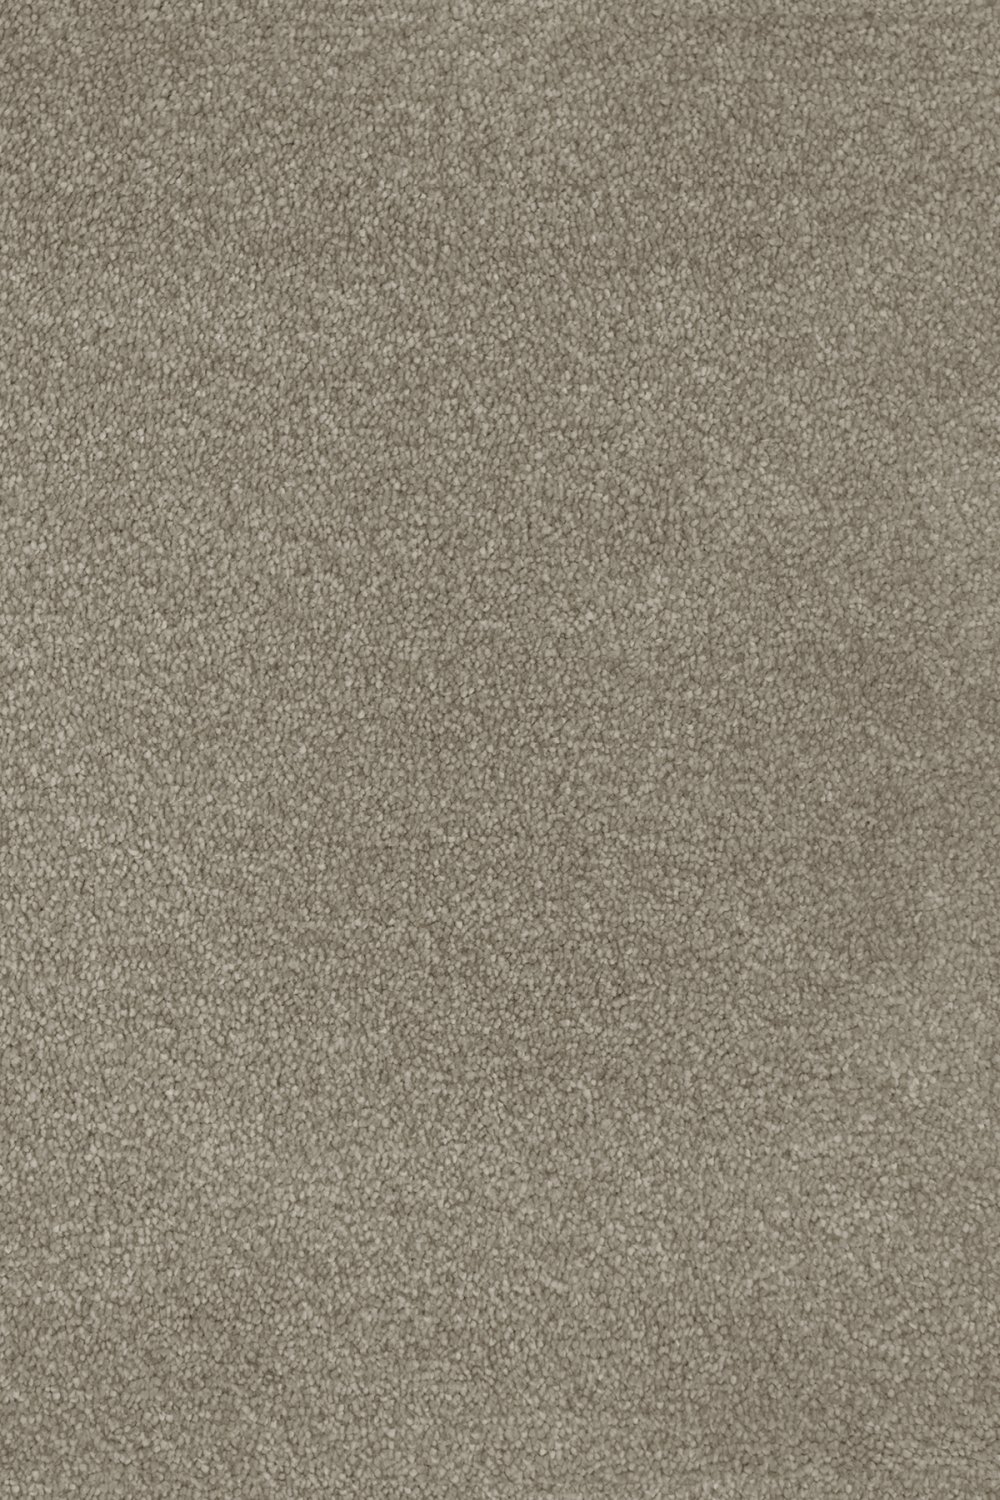 Septimus Twist Carpet - Portland Stone 38